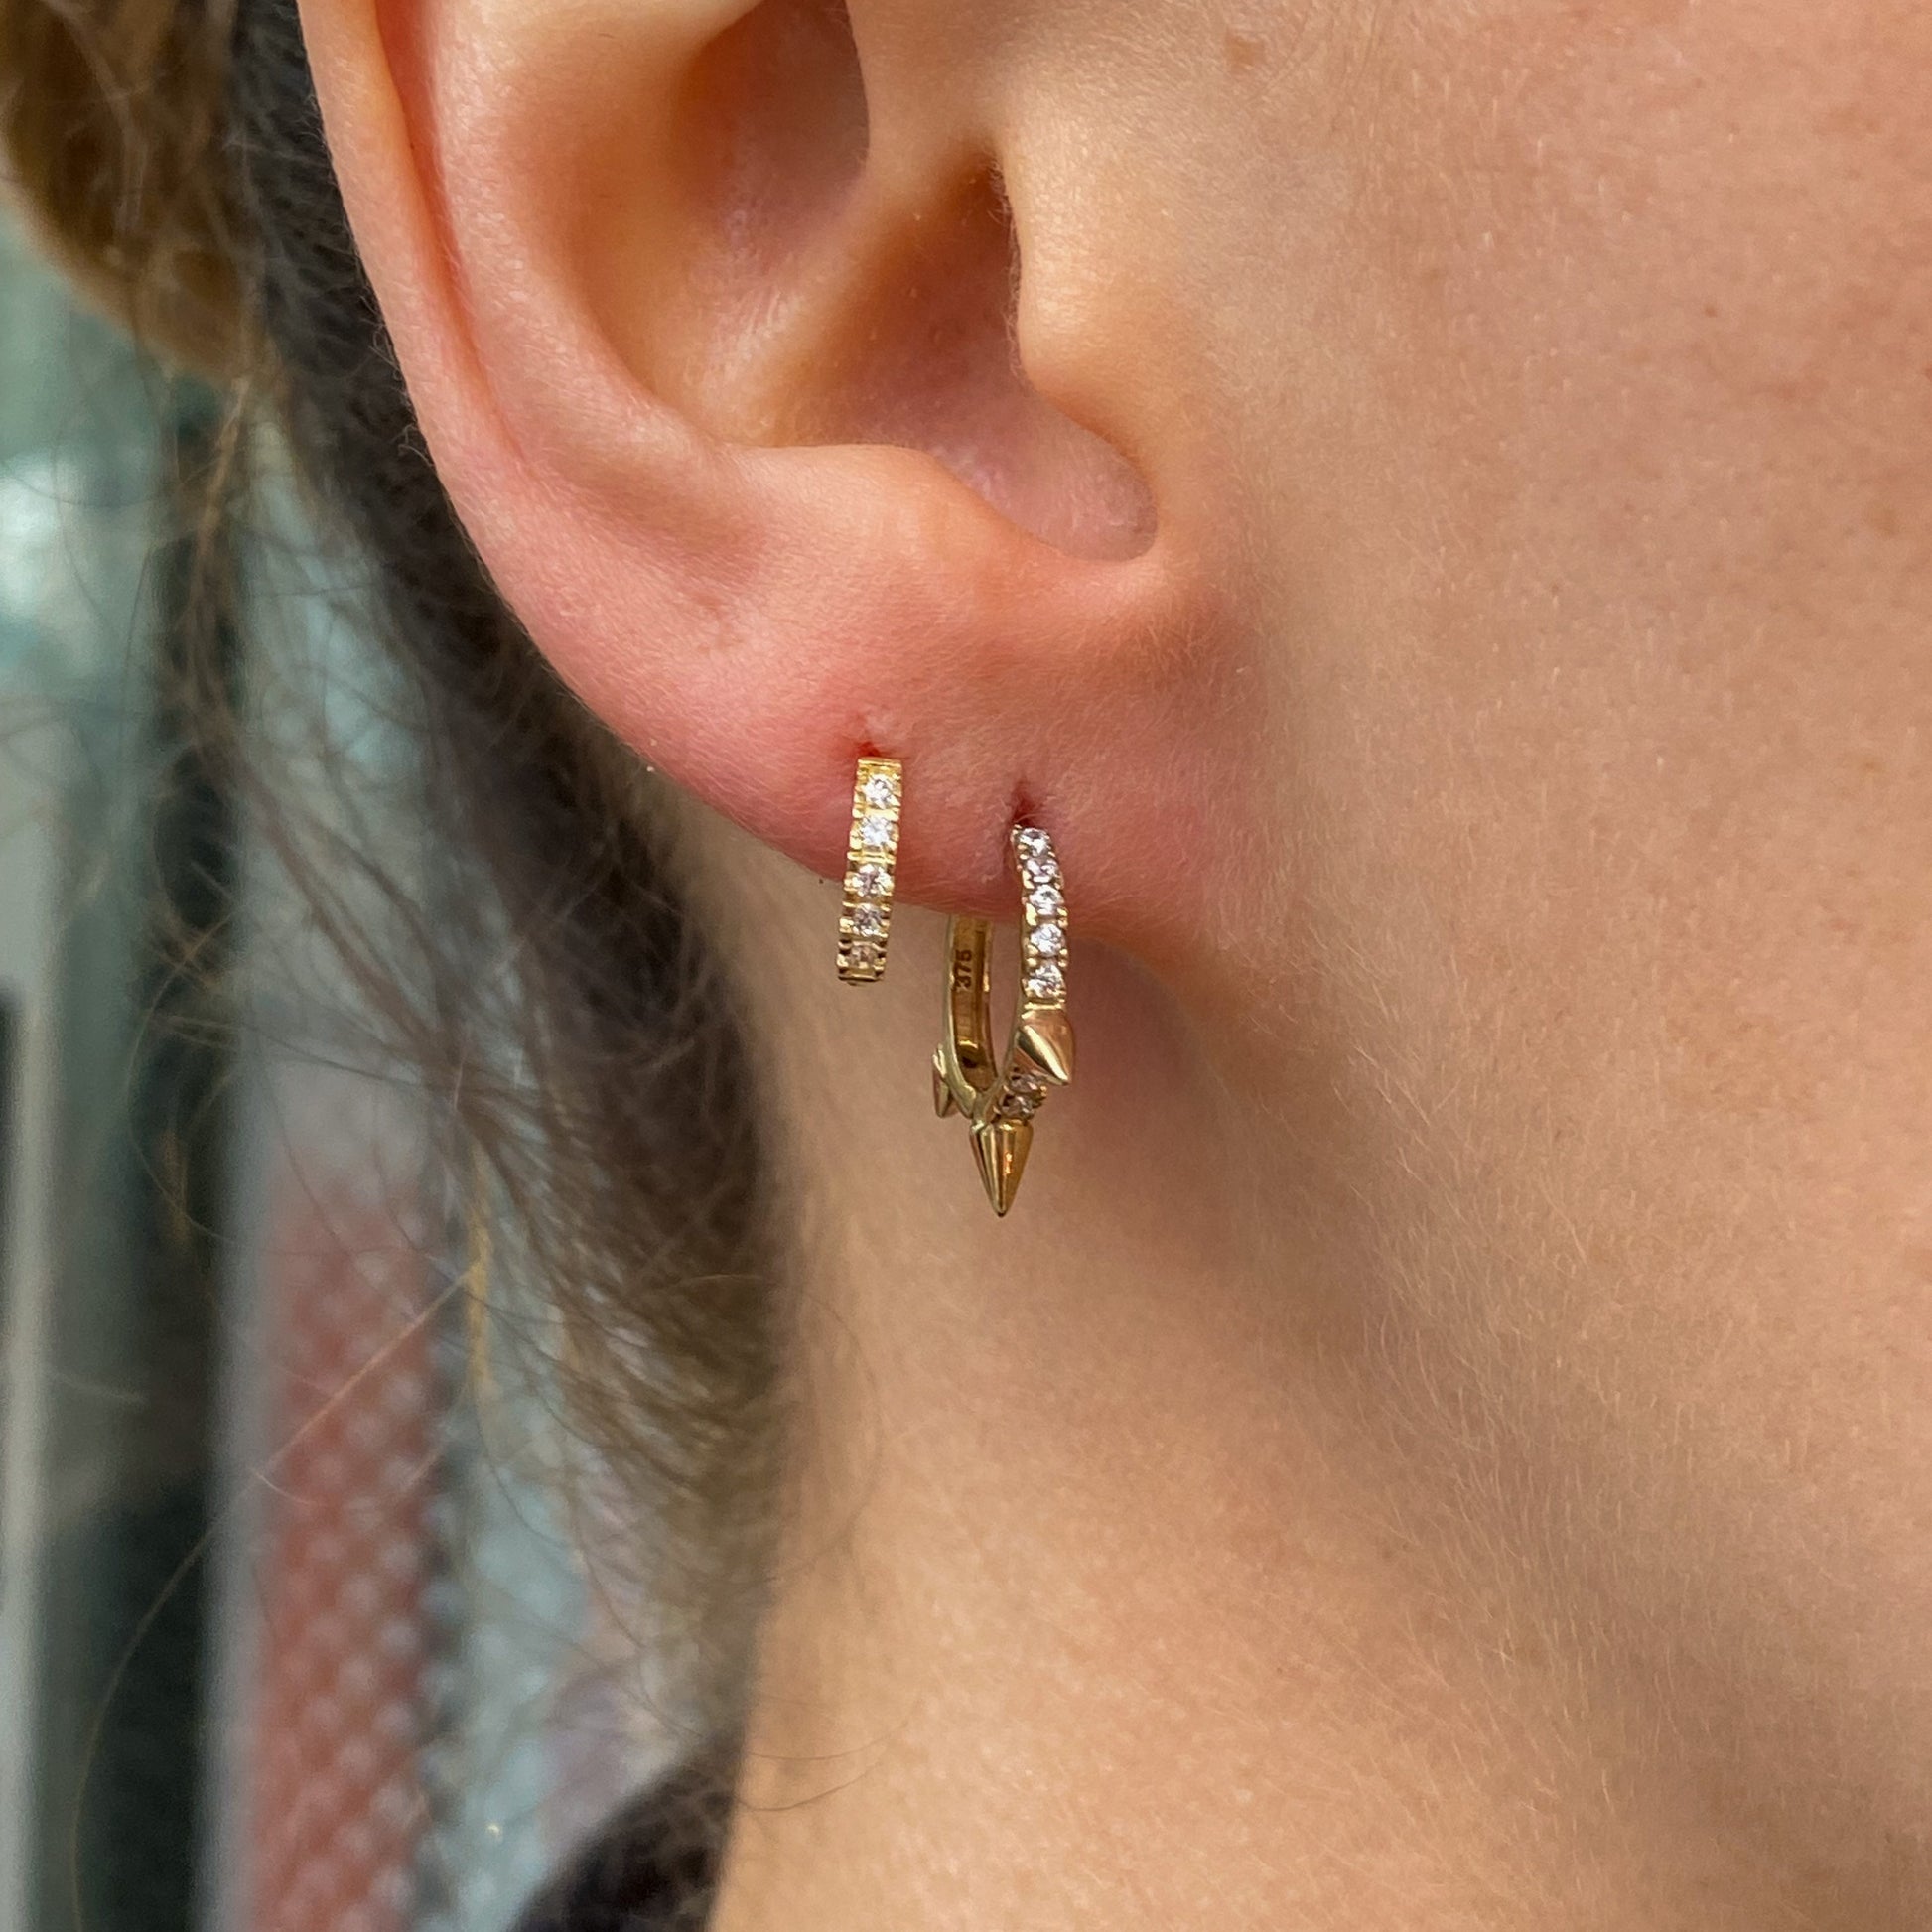 9ct Gold Spiked CZ Huggie Hoop Earrings - John Ross Jewellers